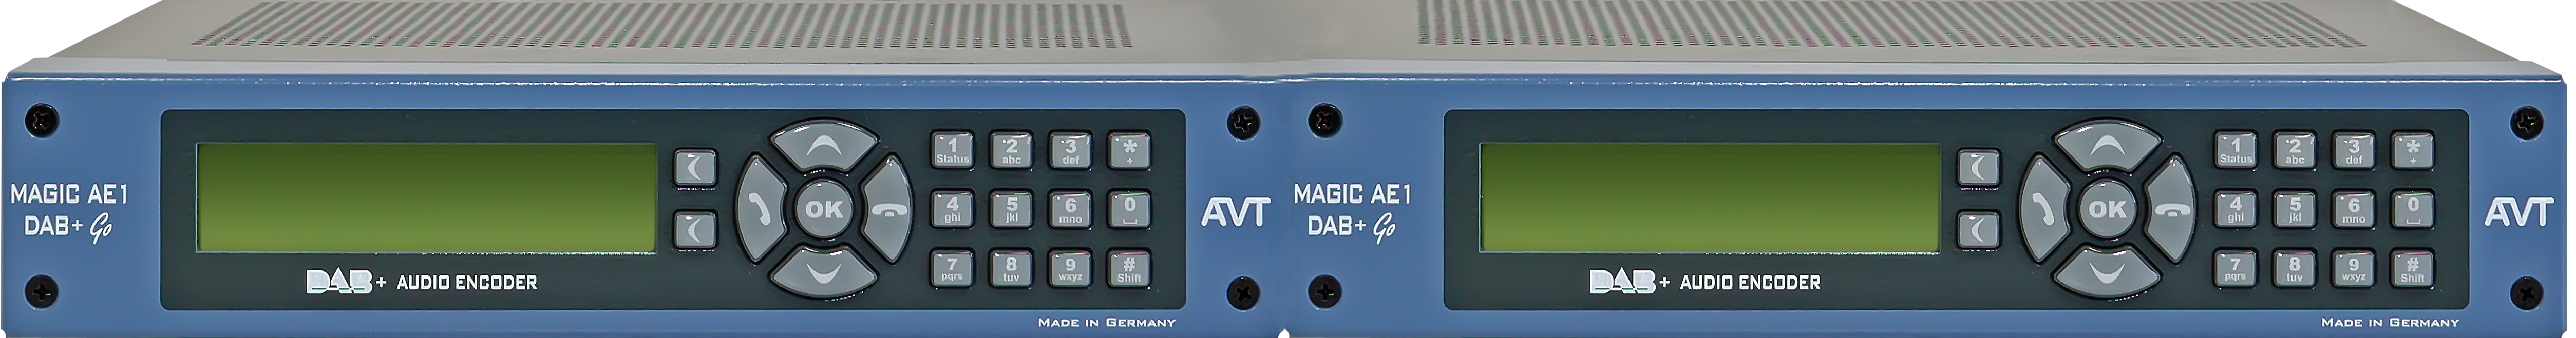 AVT MAGIC AE1 DAB+ Go DUAL 19” Mounting Kit Опция 